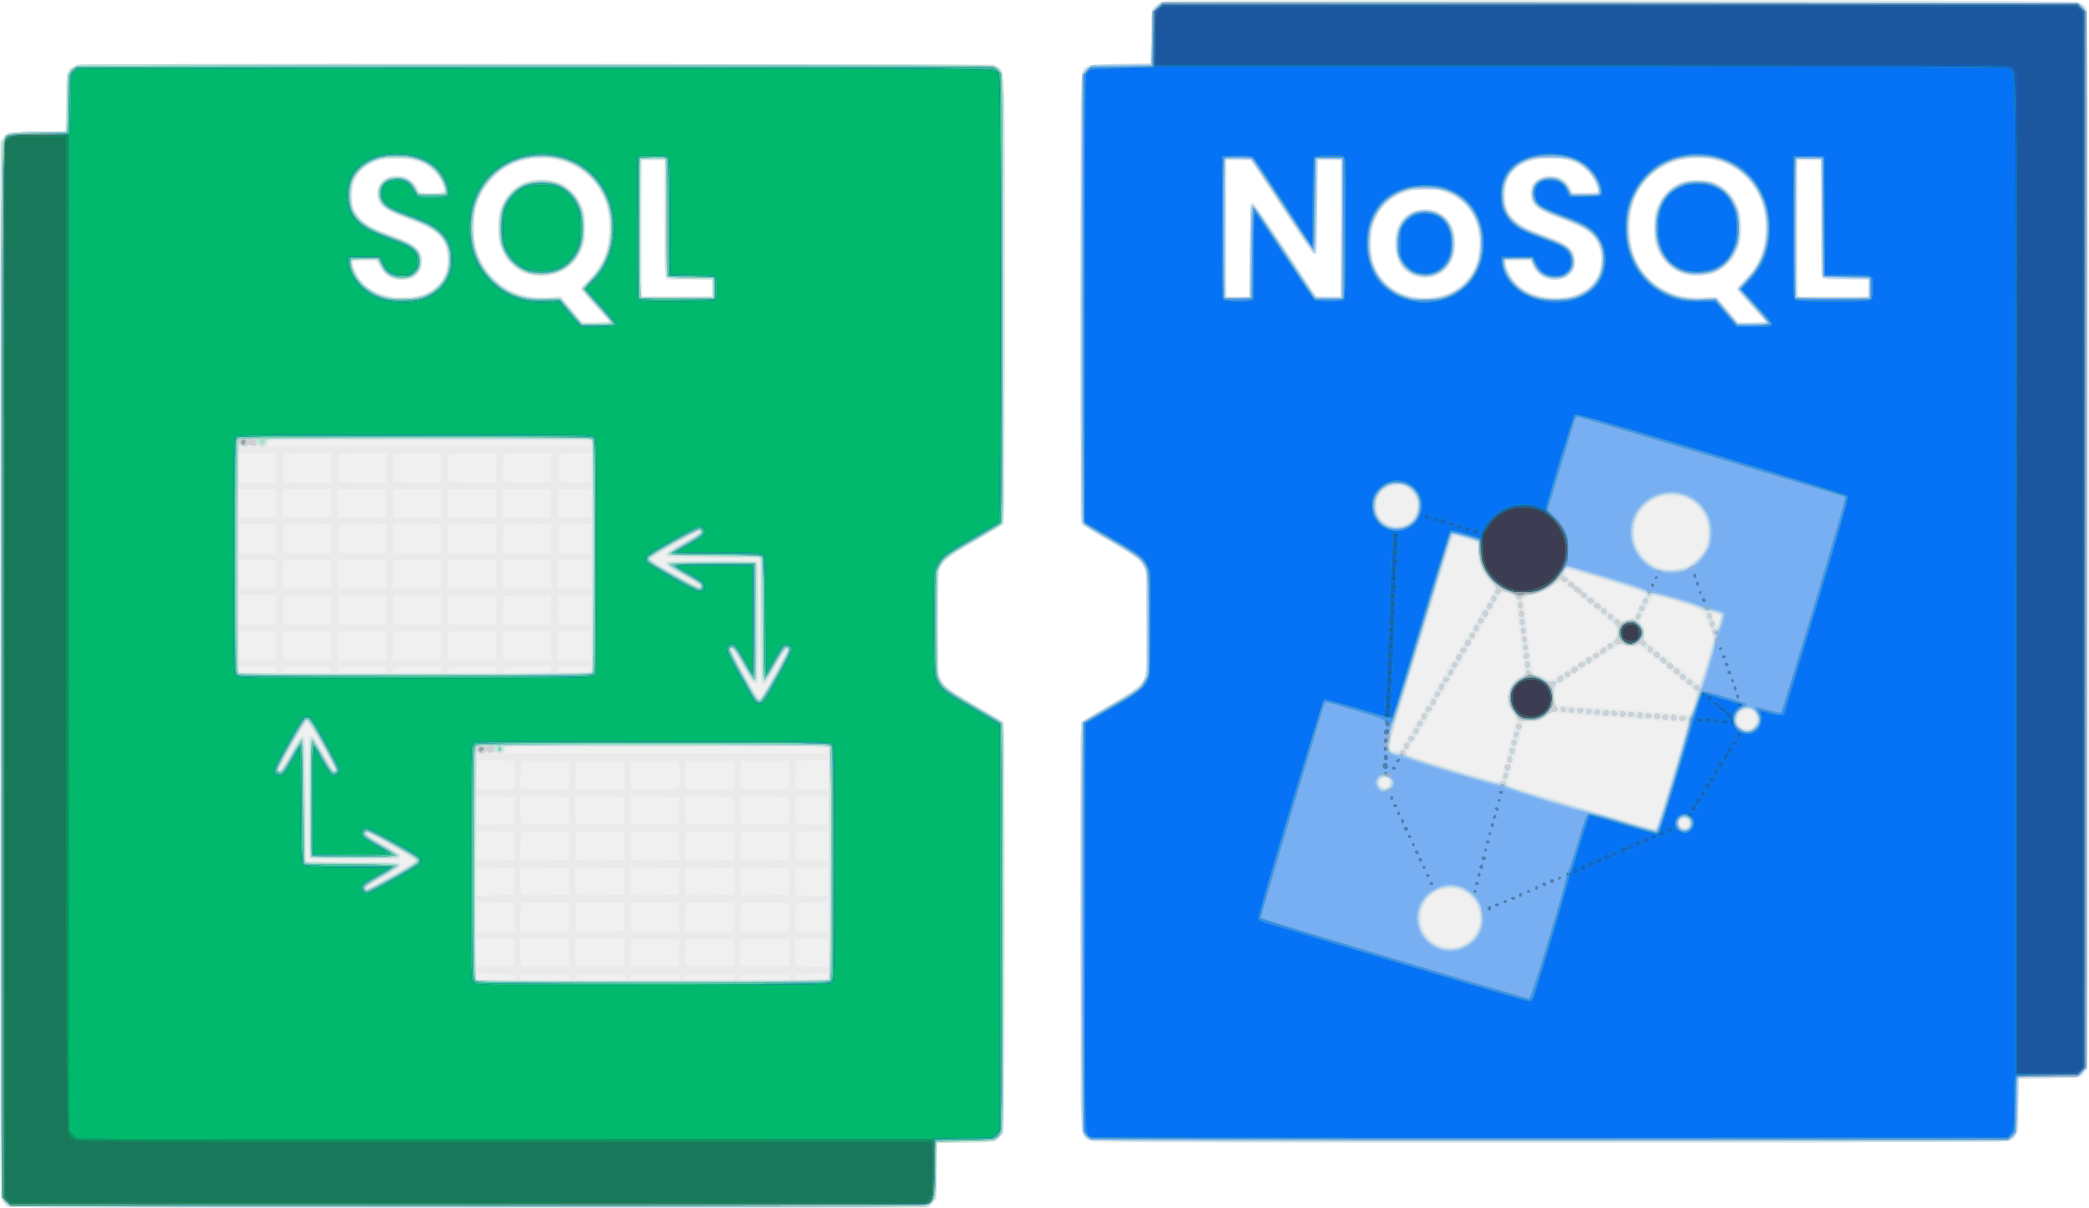 NoSQL 